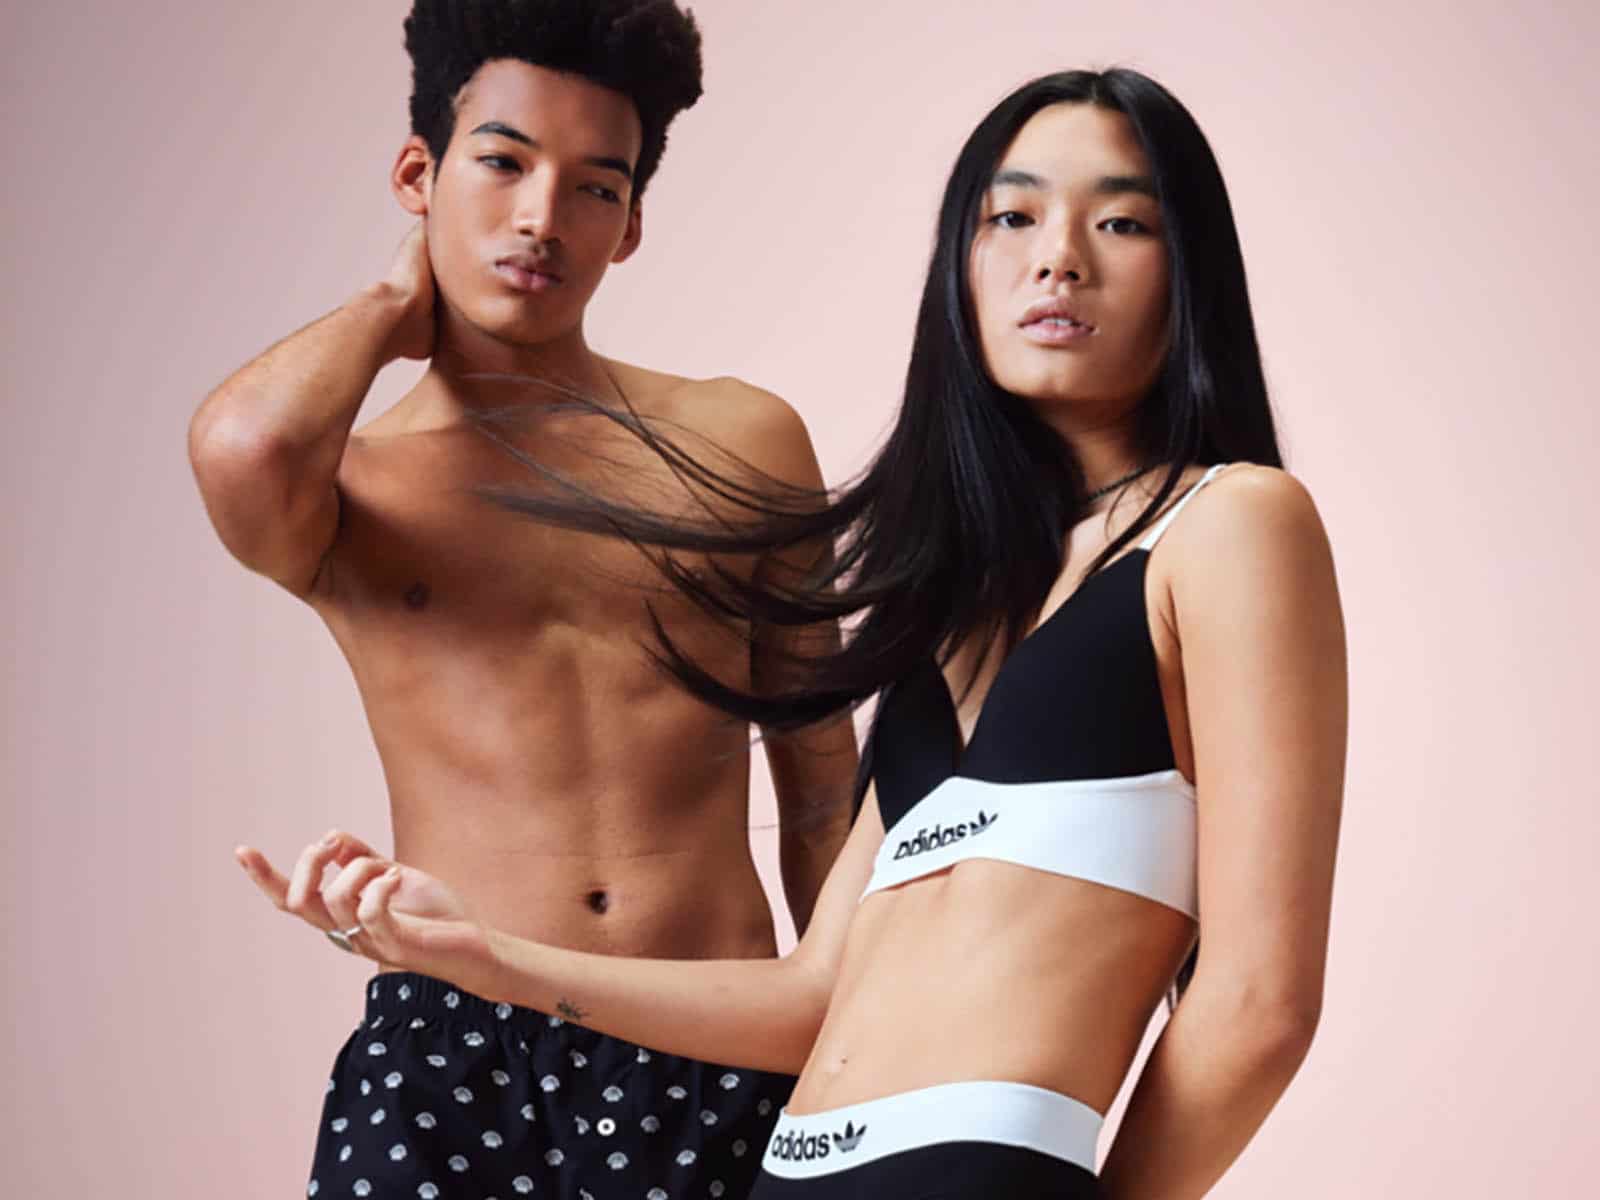 Delta Galil introduces full range underwear collection to Adidas